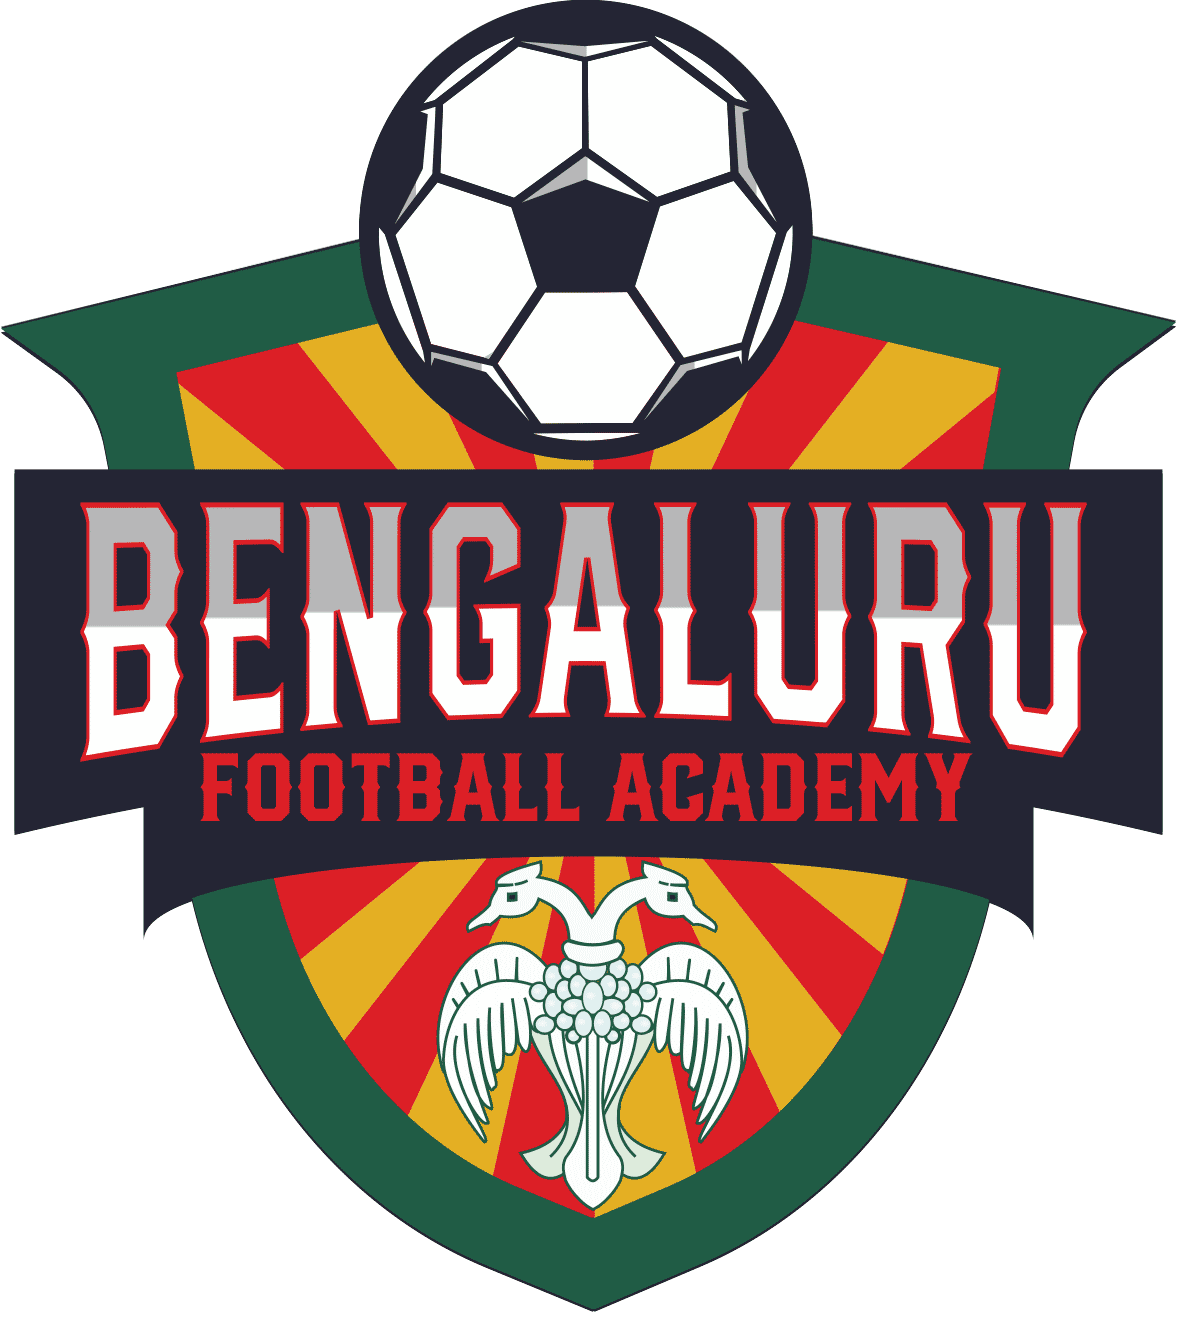 Bengaluru Football Academy